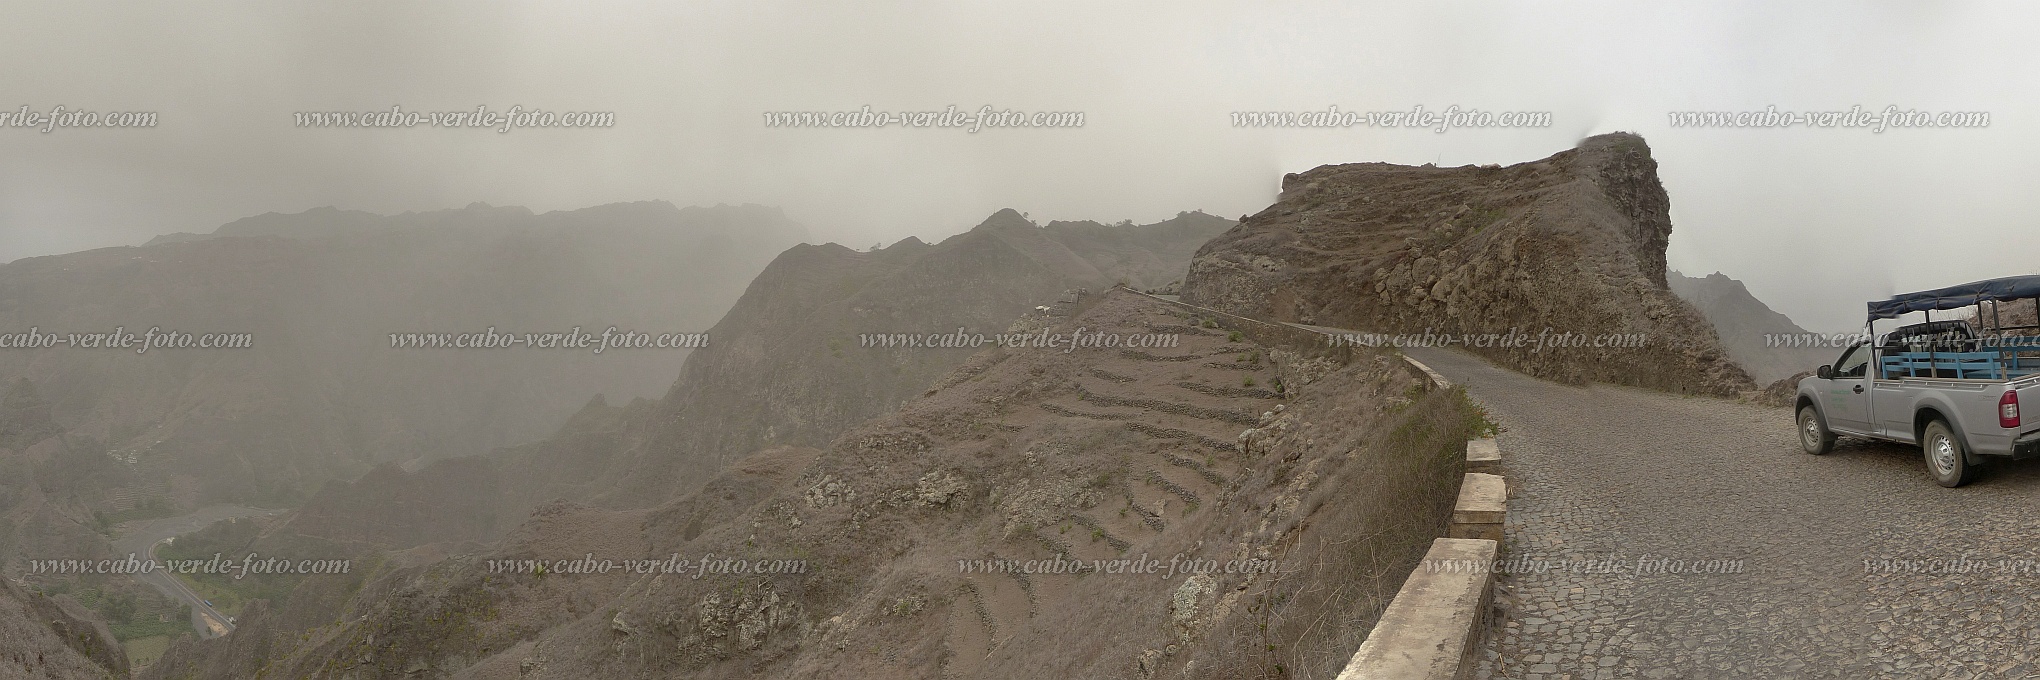 Santo Anto : Delgadinho : harmattan : Landscape MountainCabo Verde Foto Gallery